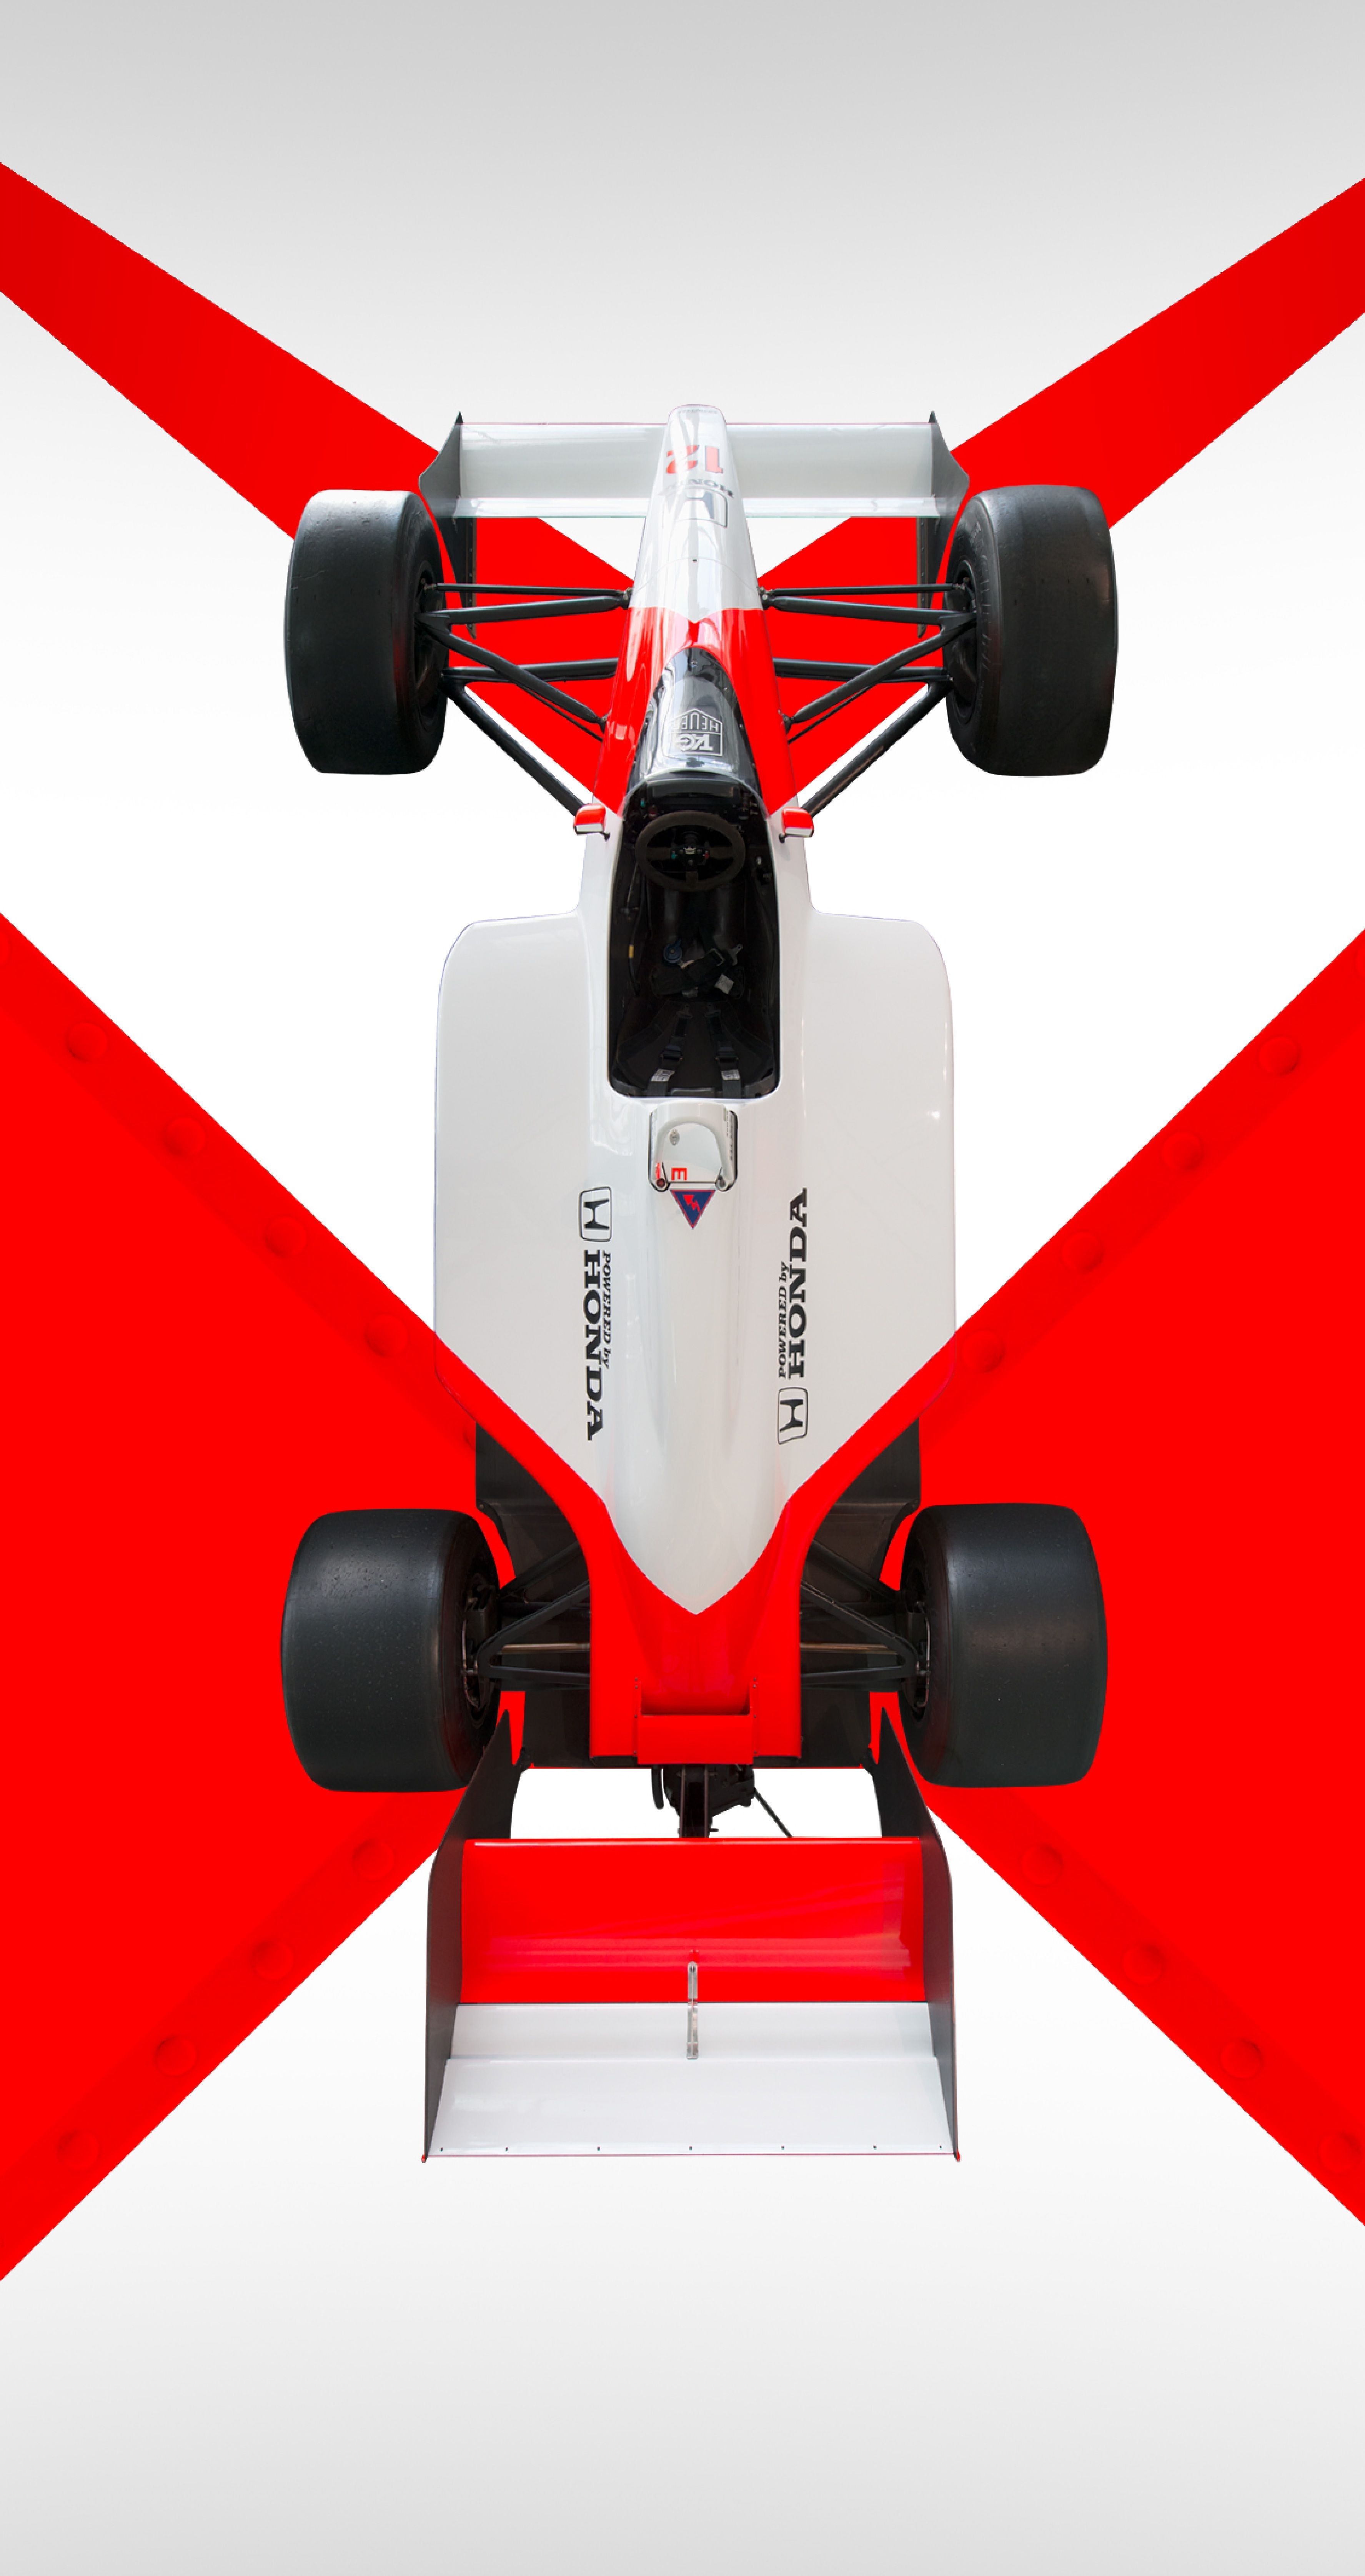 Formula 1 iPhone Wallpaper